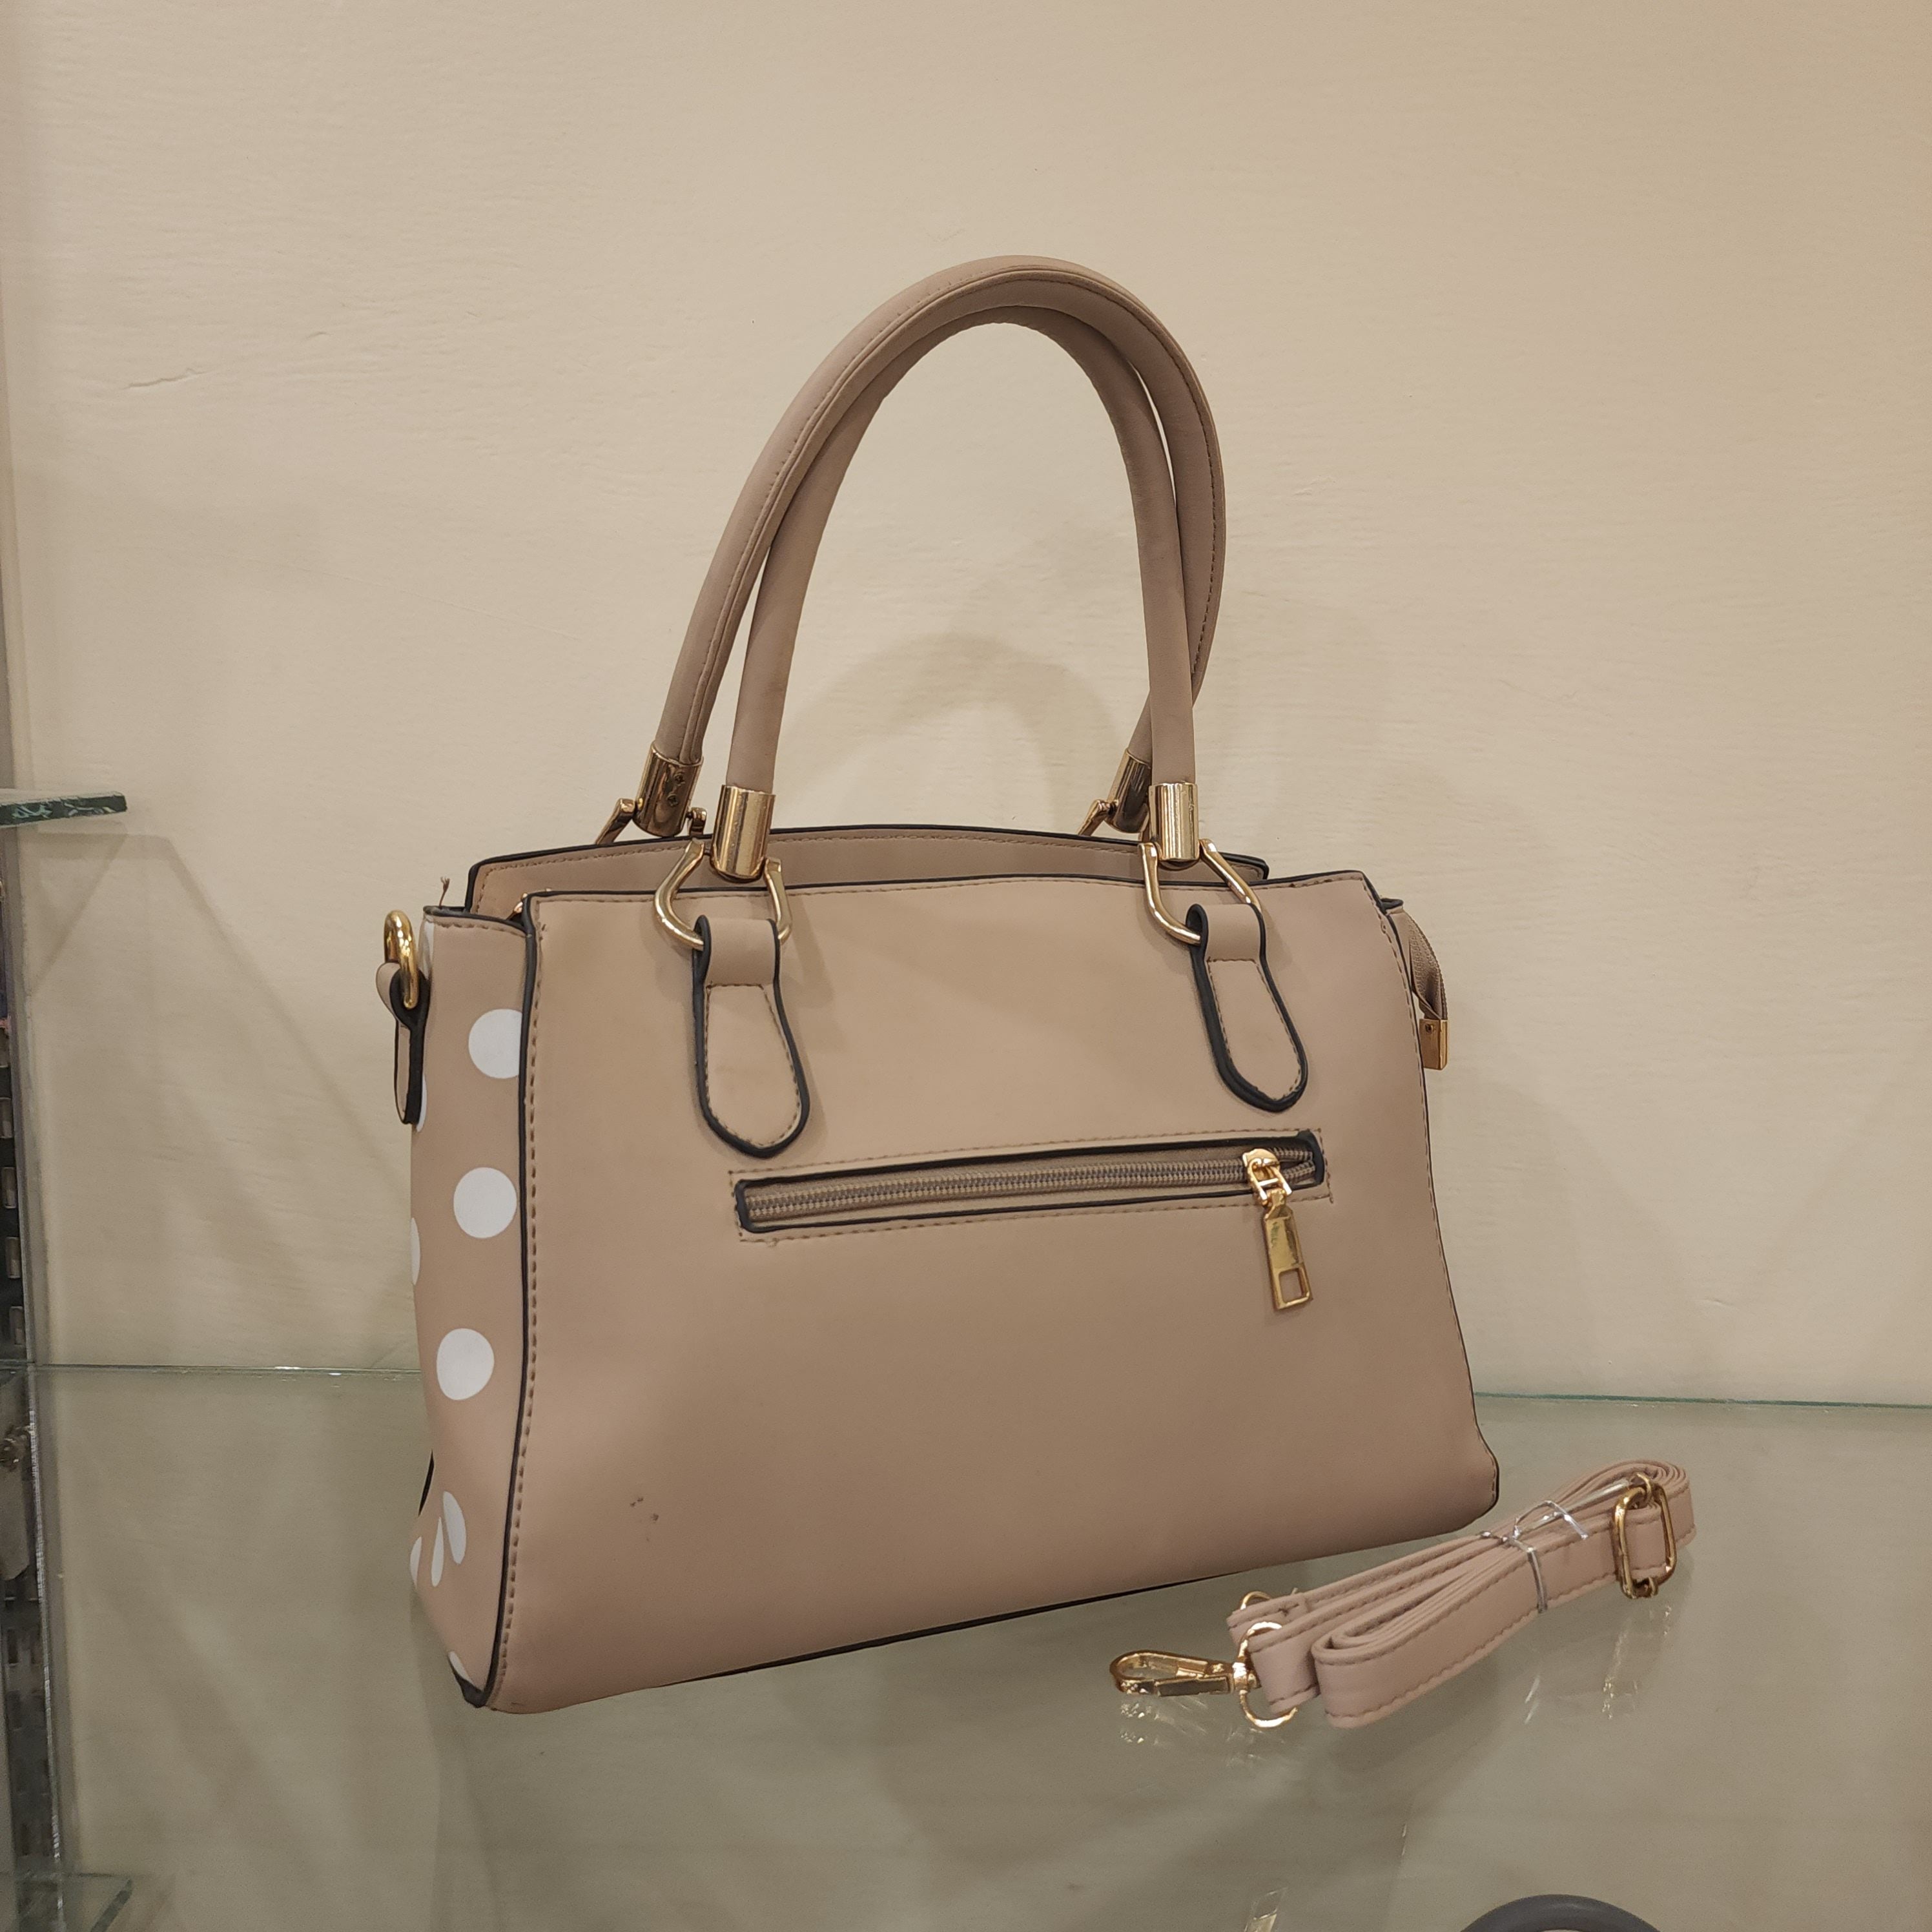 Beige Polkadot Handbags - Maha fashions -  Handbags & Wallets